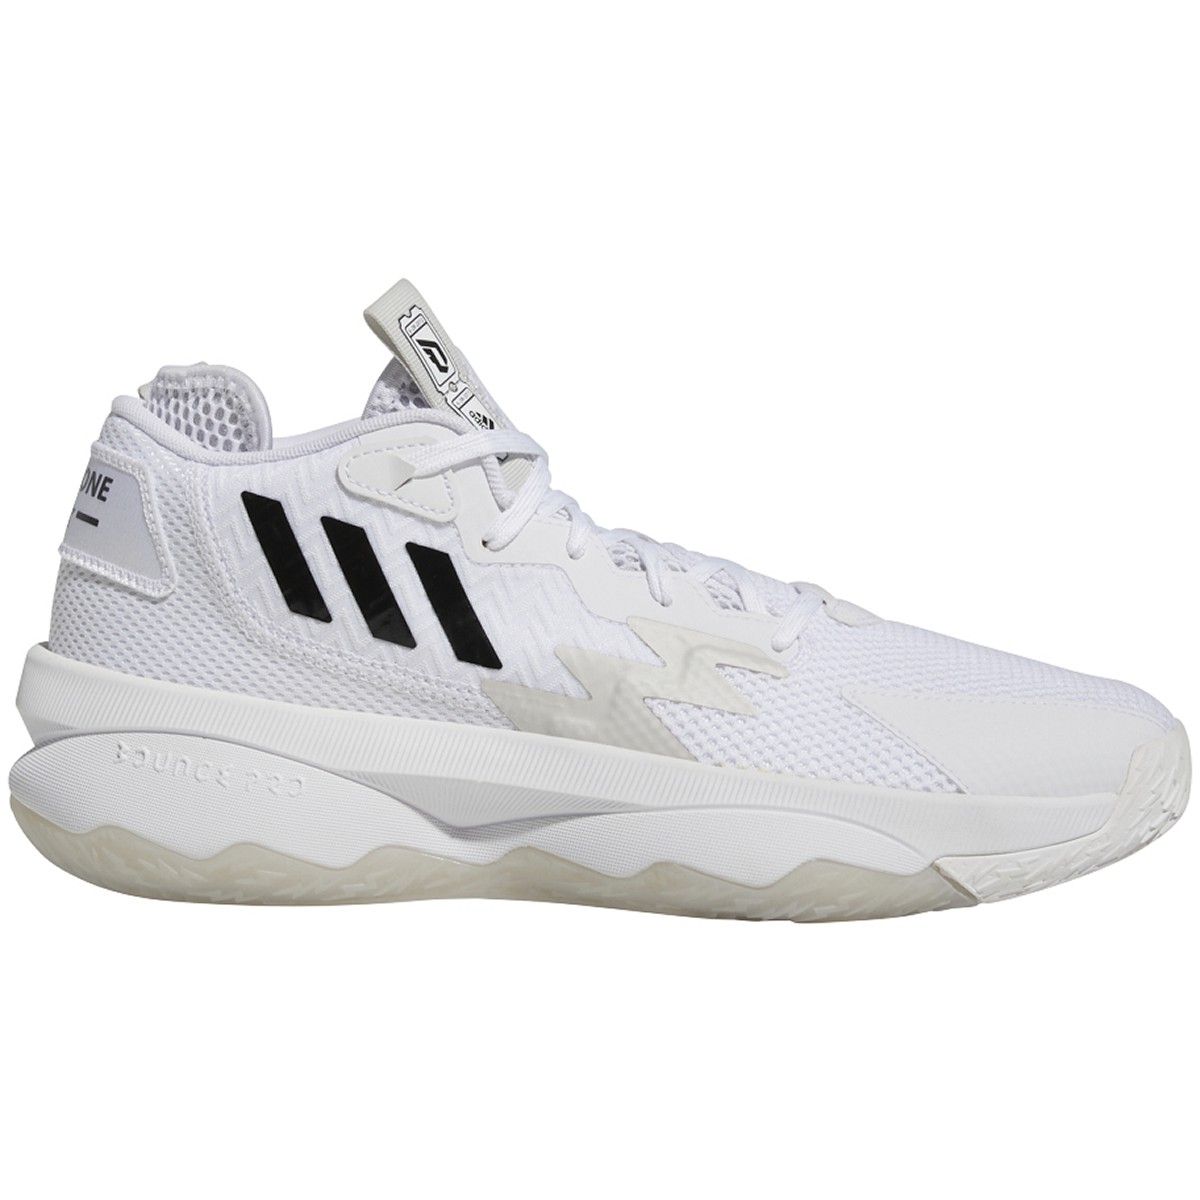 adidas Dame 8 - Damian Lillard - Basketball Shoes in White | GY6462